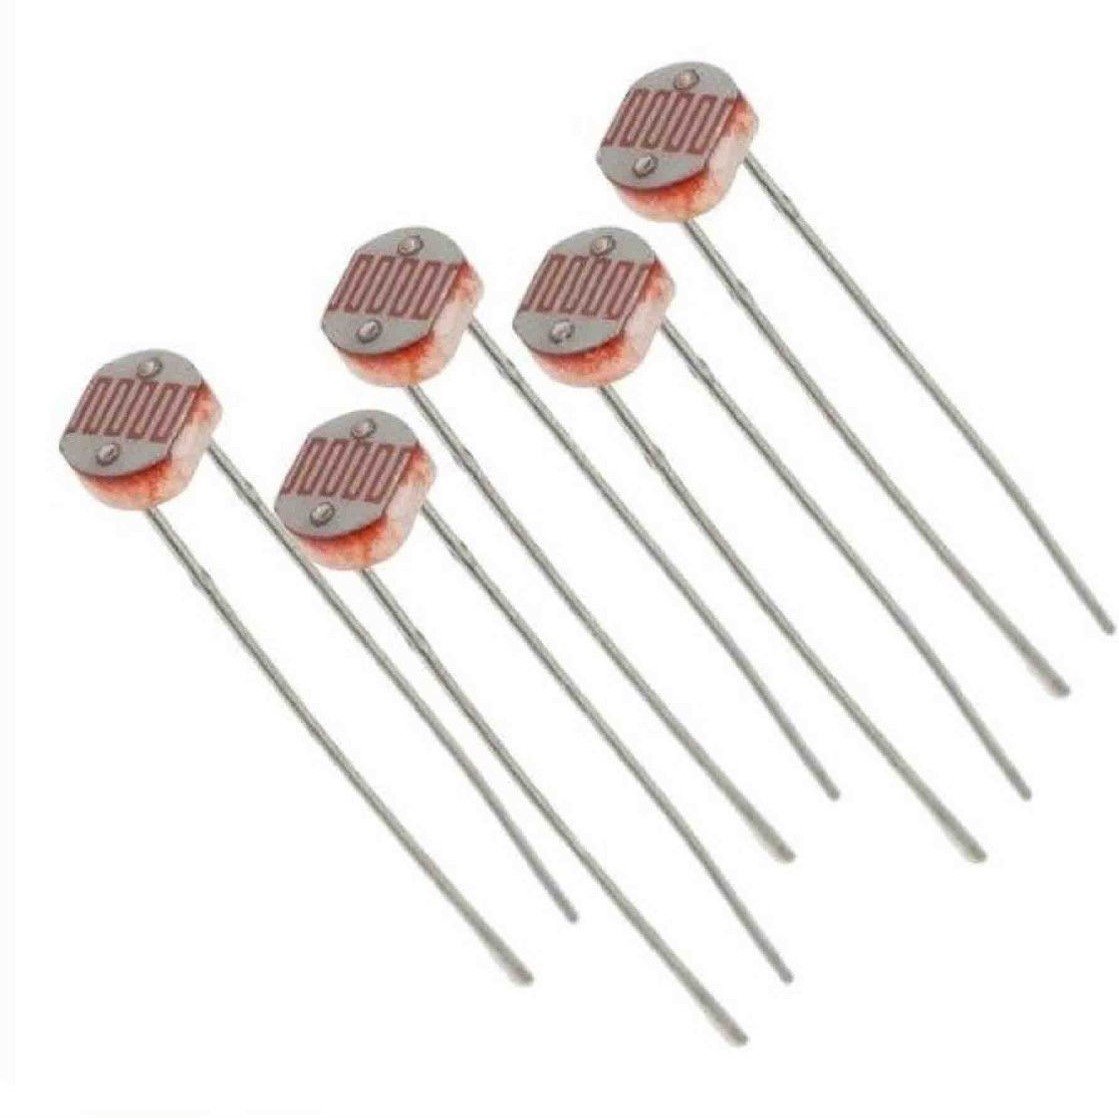 5mm LDR Light Dependent Resistor